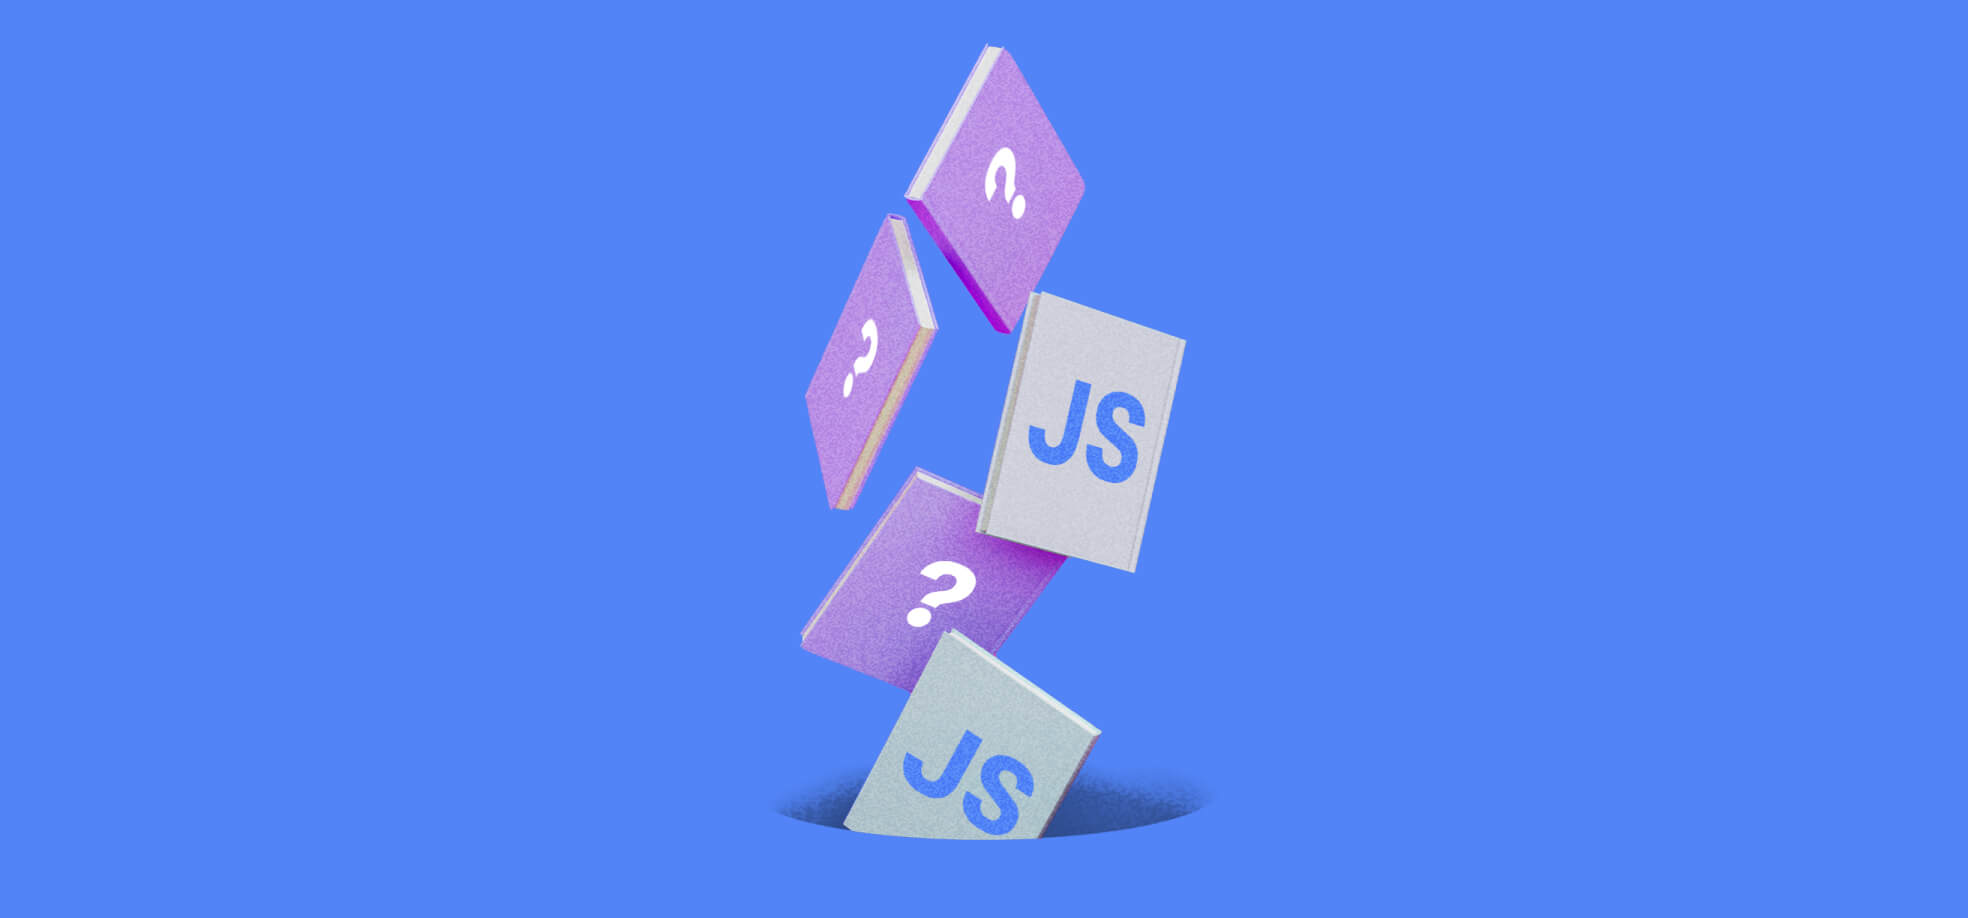 JavaScript logo on square illustrations